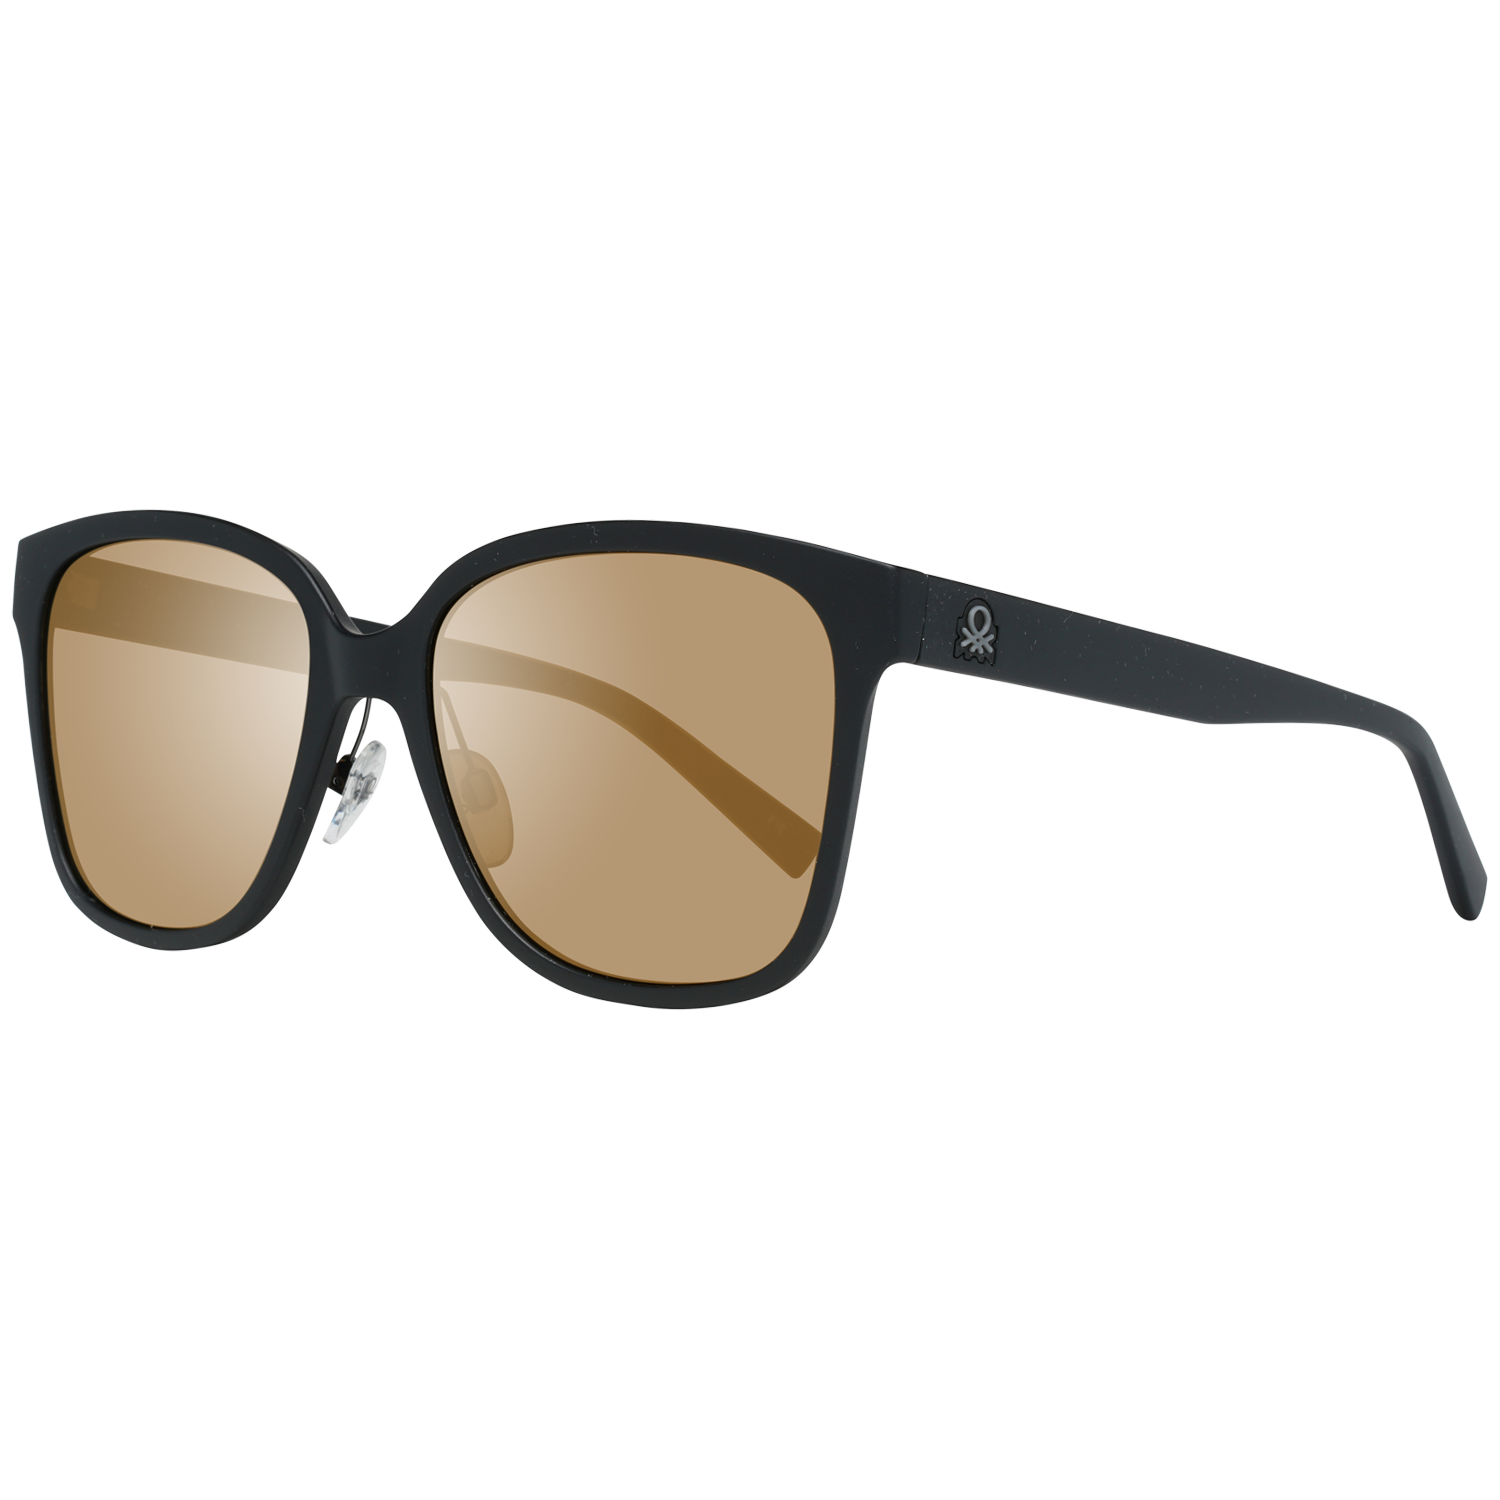 Benetton Sunglasses BE5007 001 56 Black